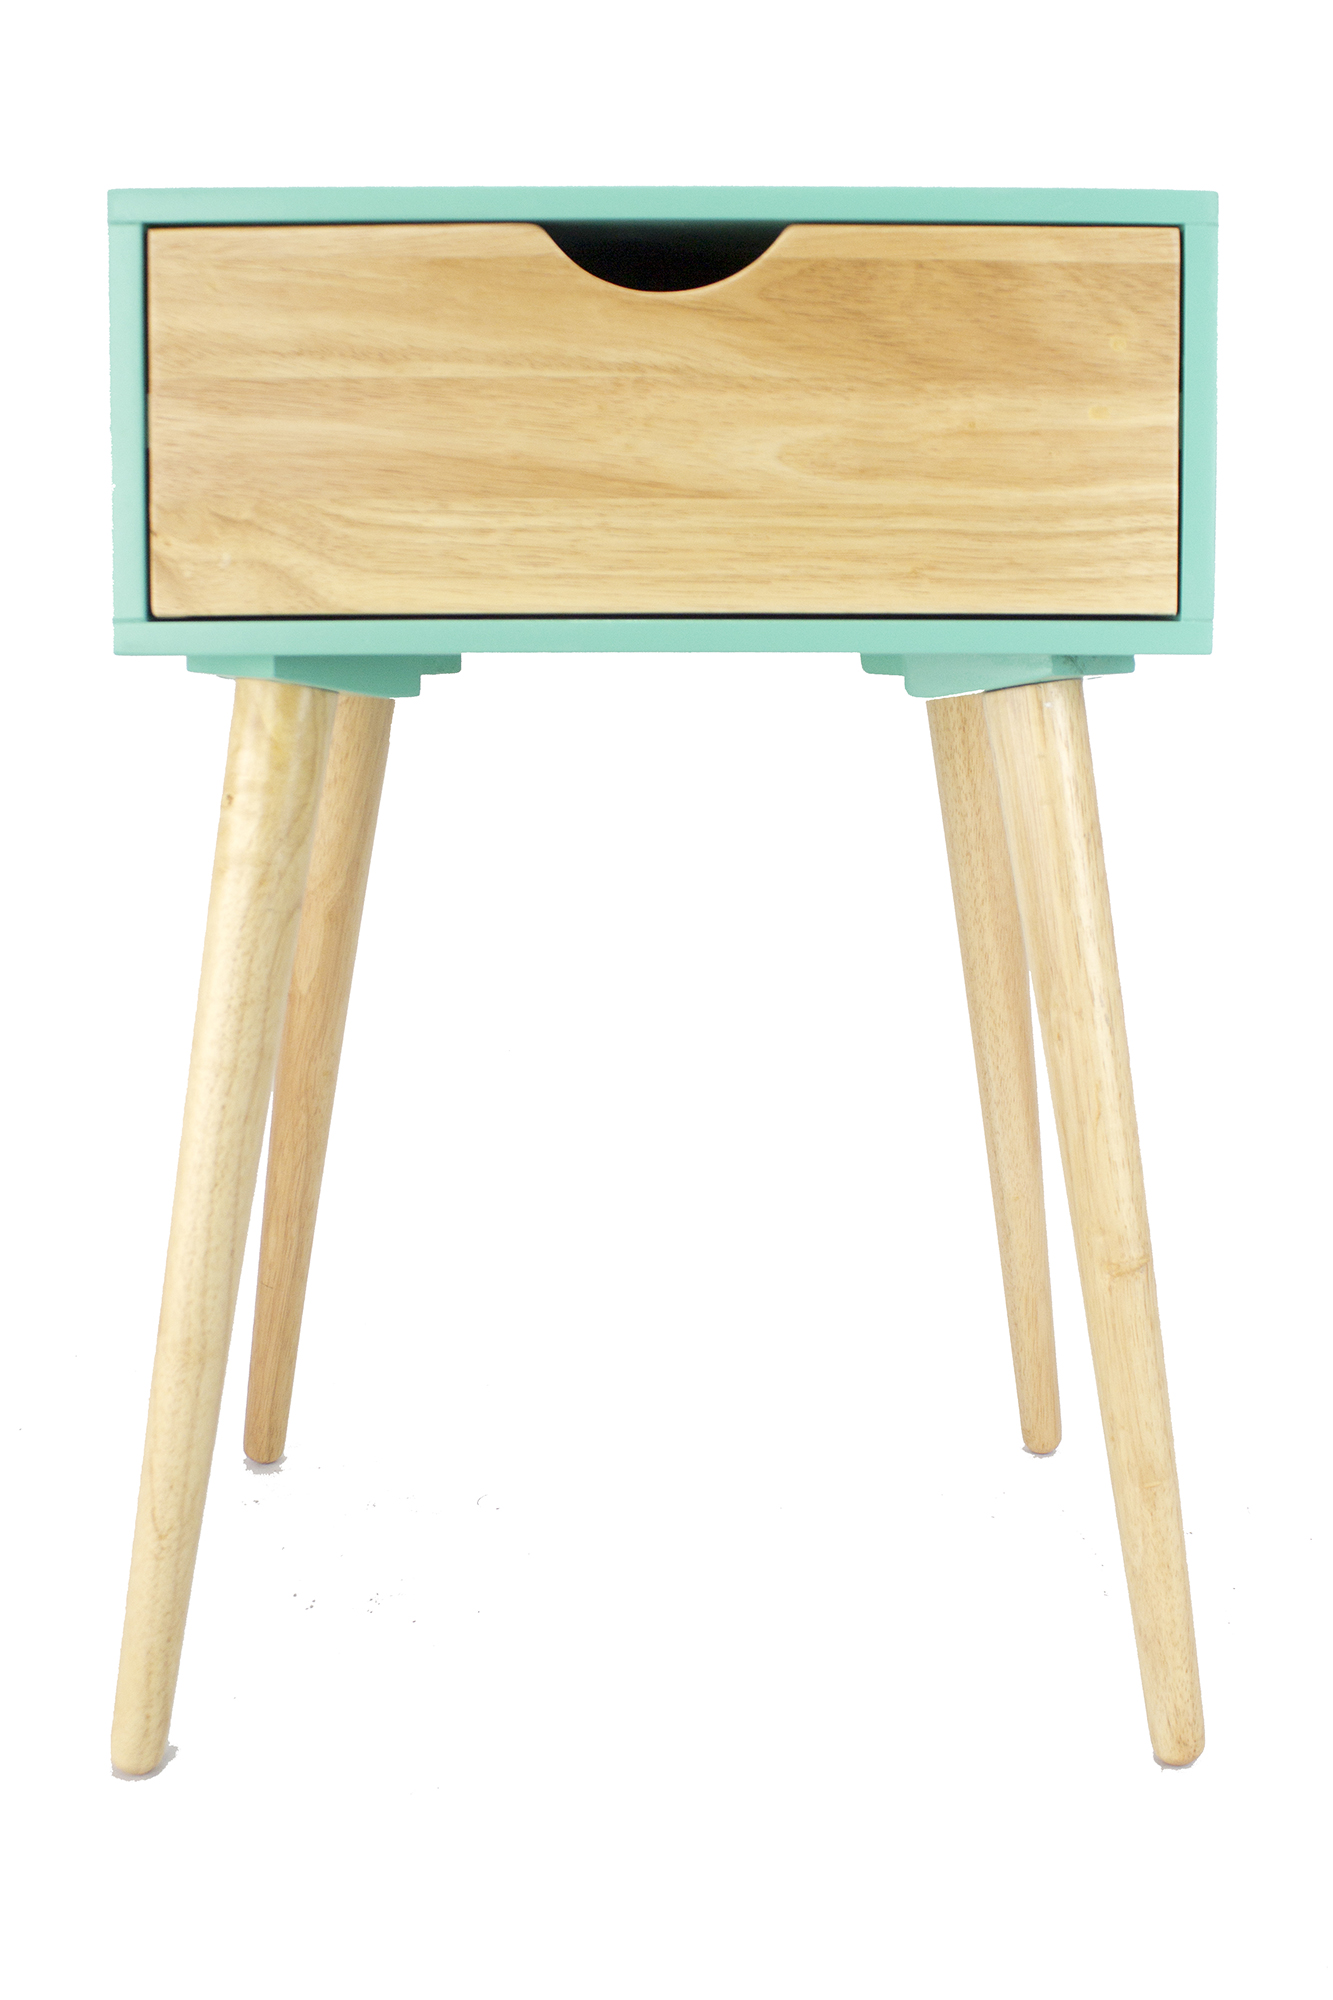 16" X 12" X 24" Aqua MDF Wood End Table with Drawer